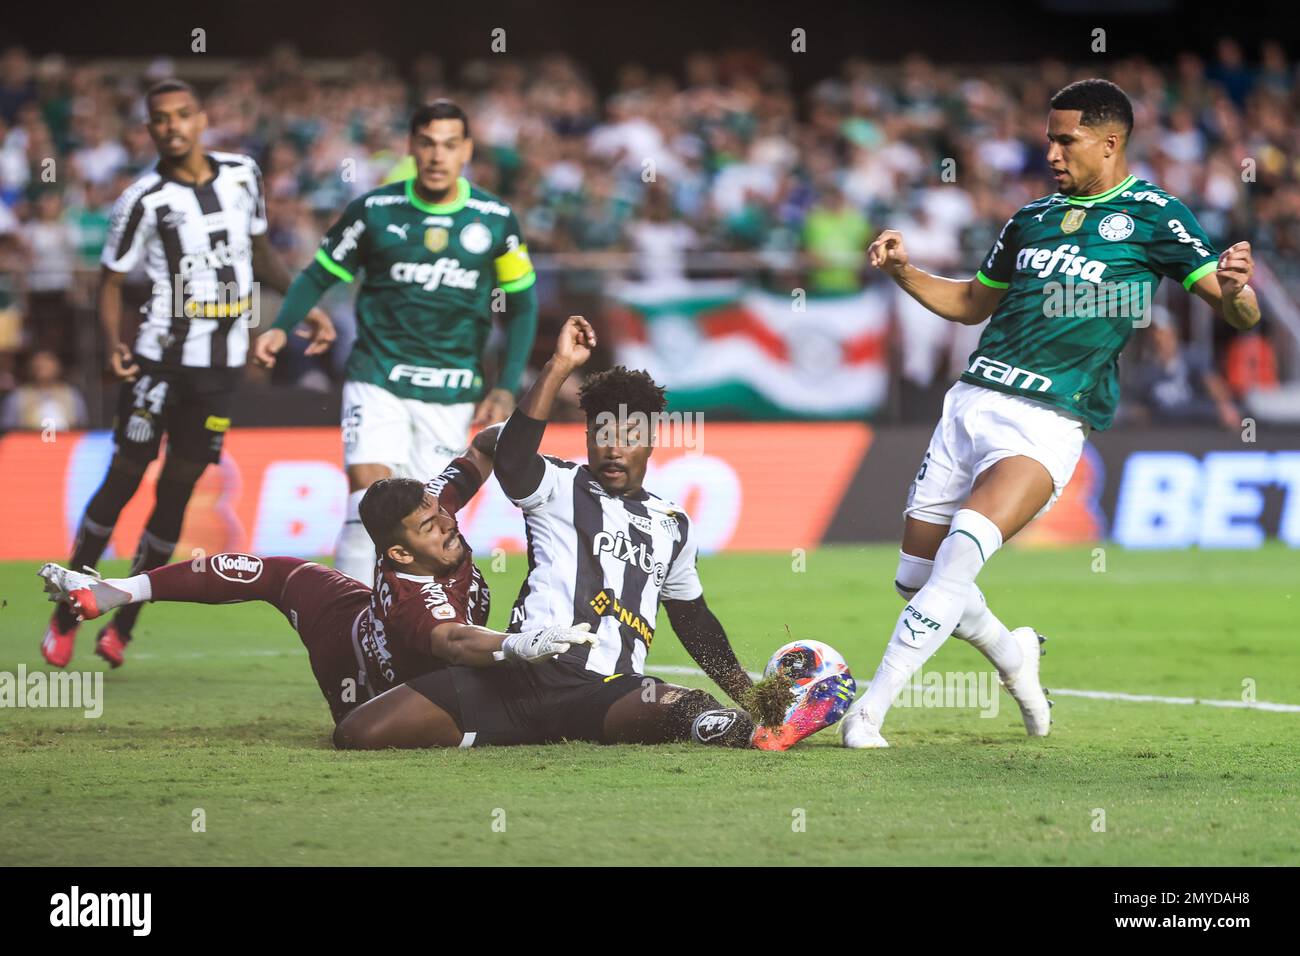 File:Copa Paulista- Juventus 0 x 2 Portuguesa - Luis Ricardo.jpg